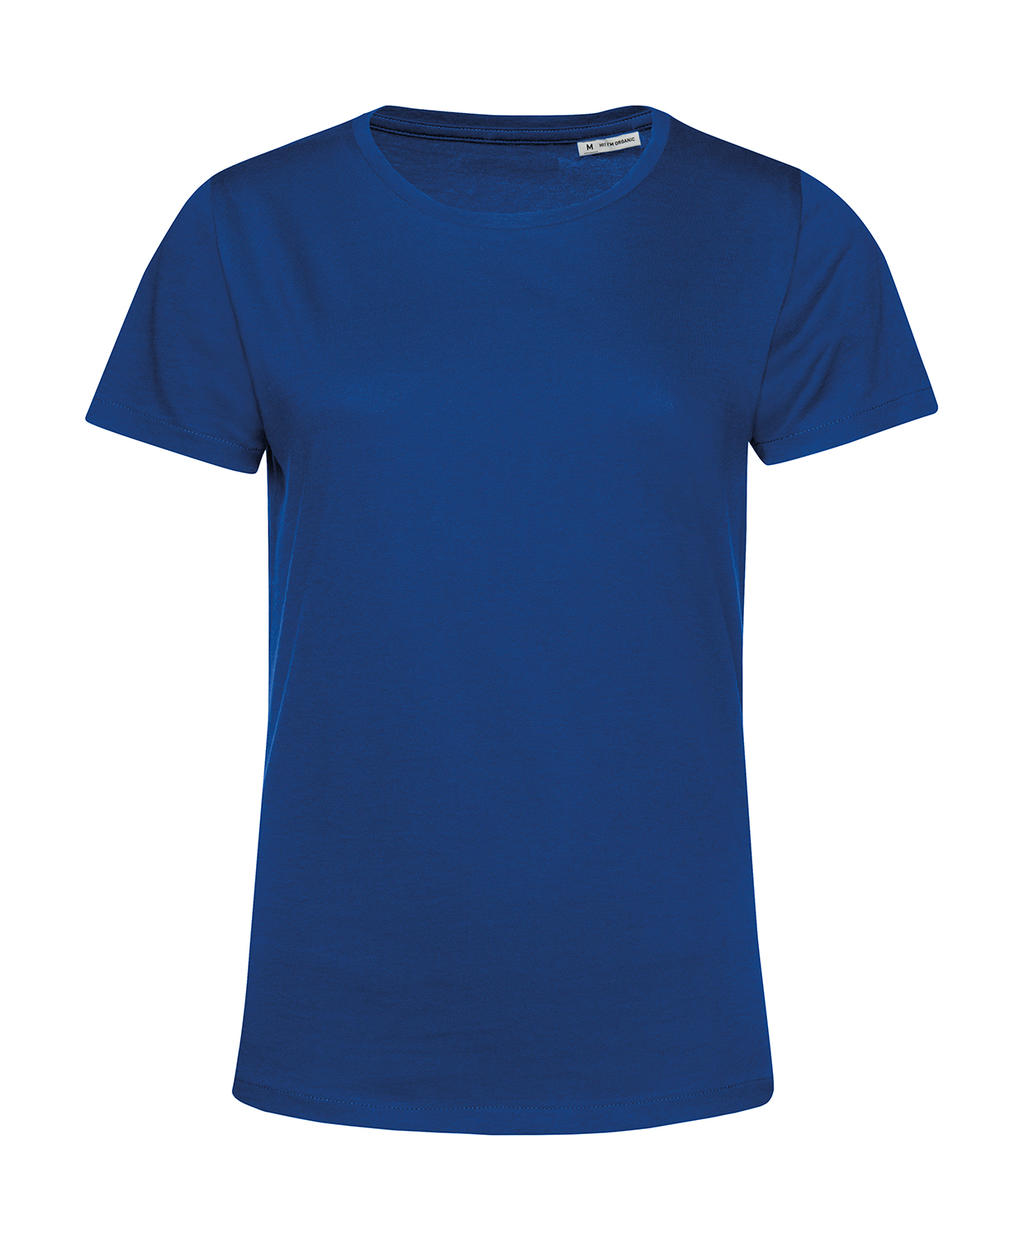 Tričko dámské BC Organic Inspire E150 - modré, S